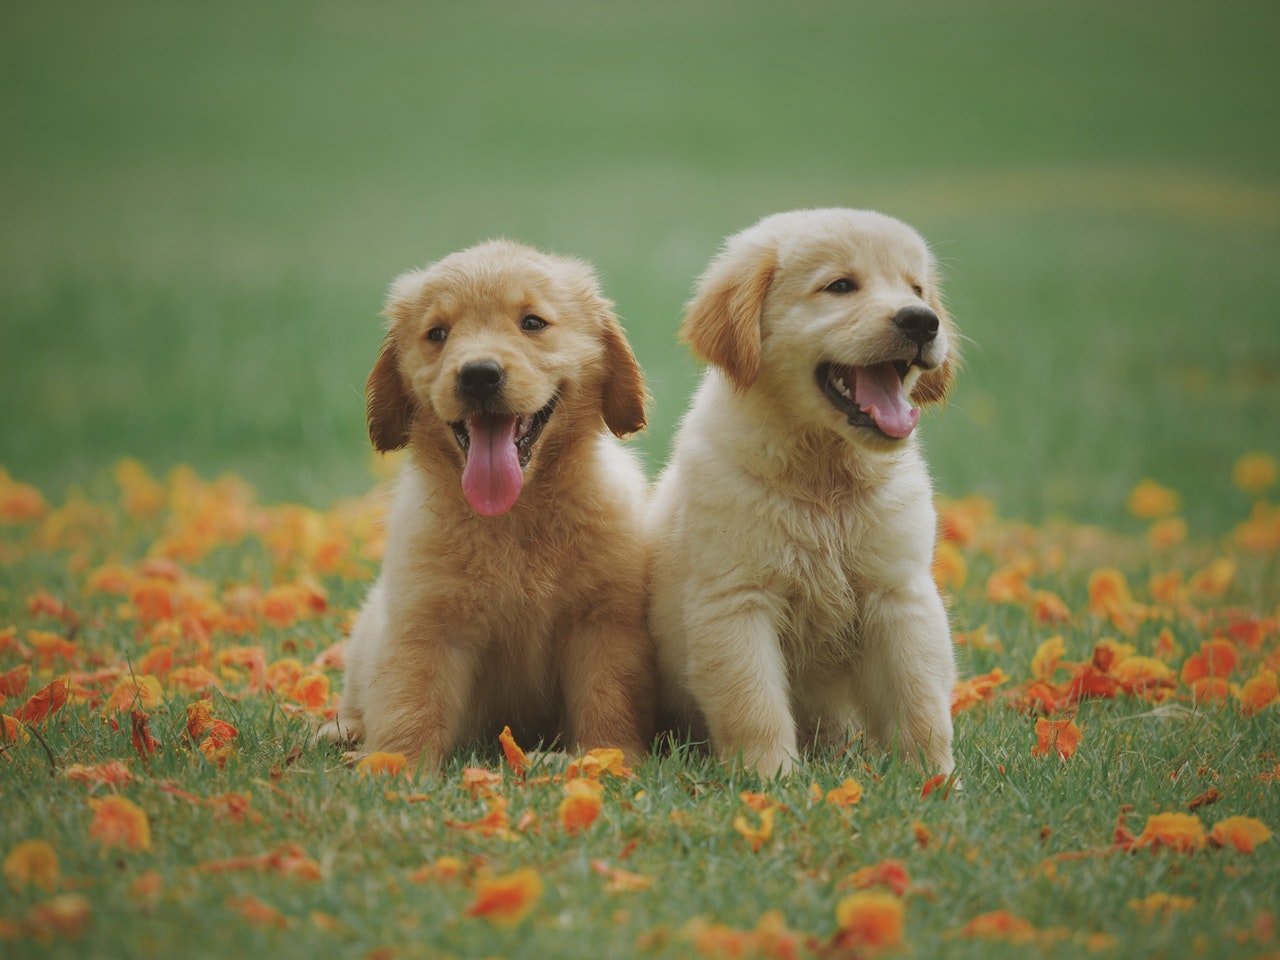 Puppy golden retrievers sitting in fields